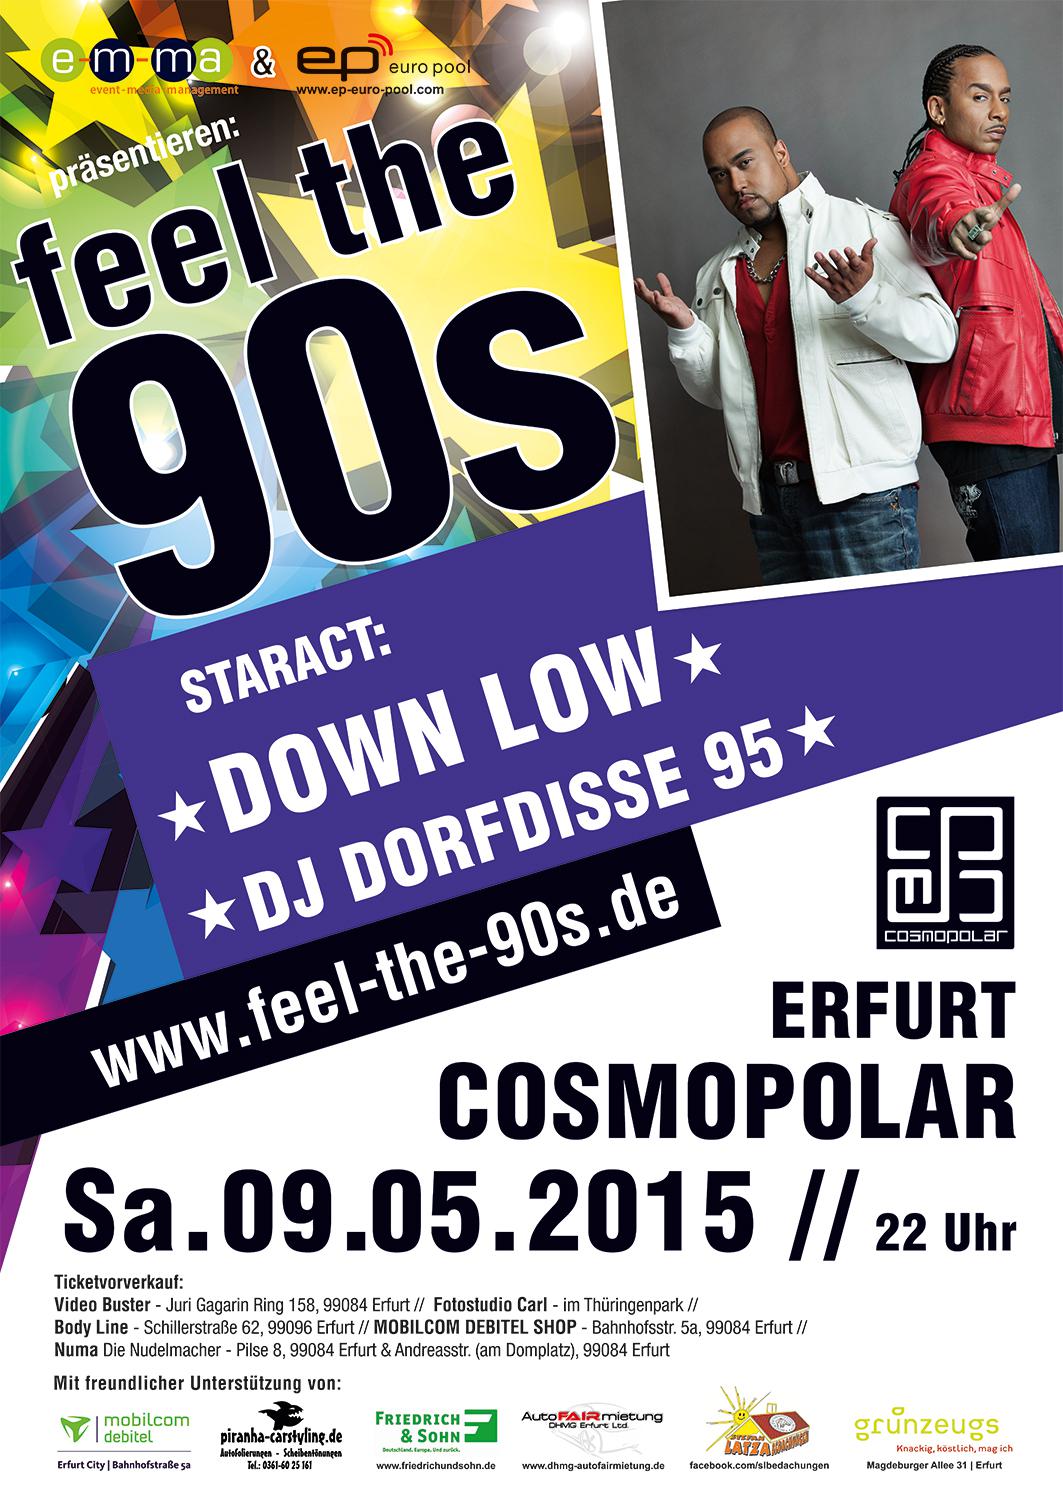 FEEL THE 90s - Staract: DOWN LOW & DJ Dorfdisse 95 - Thüringens größte 90er Party